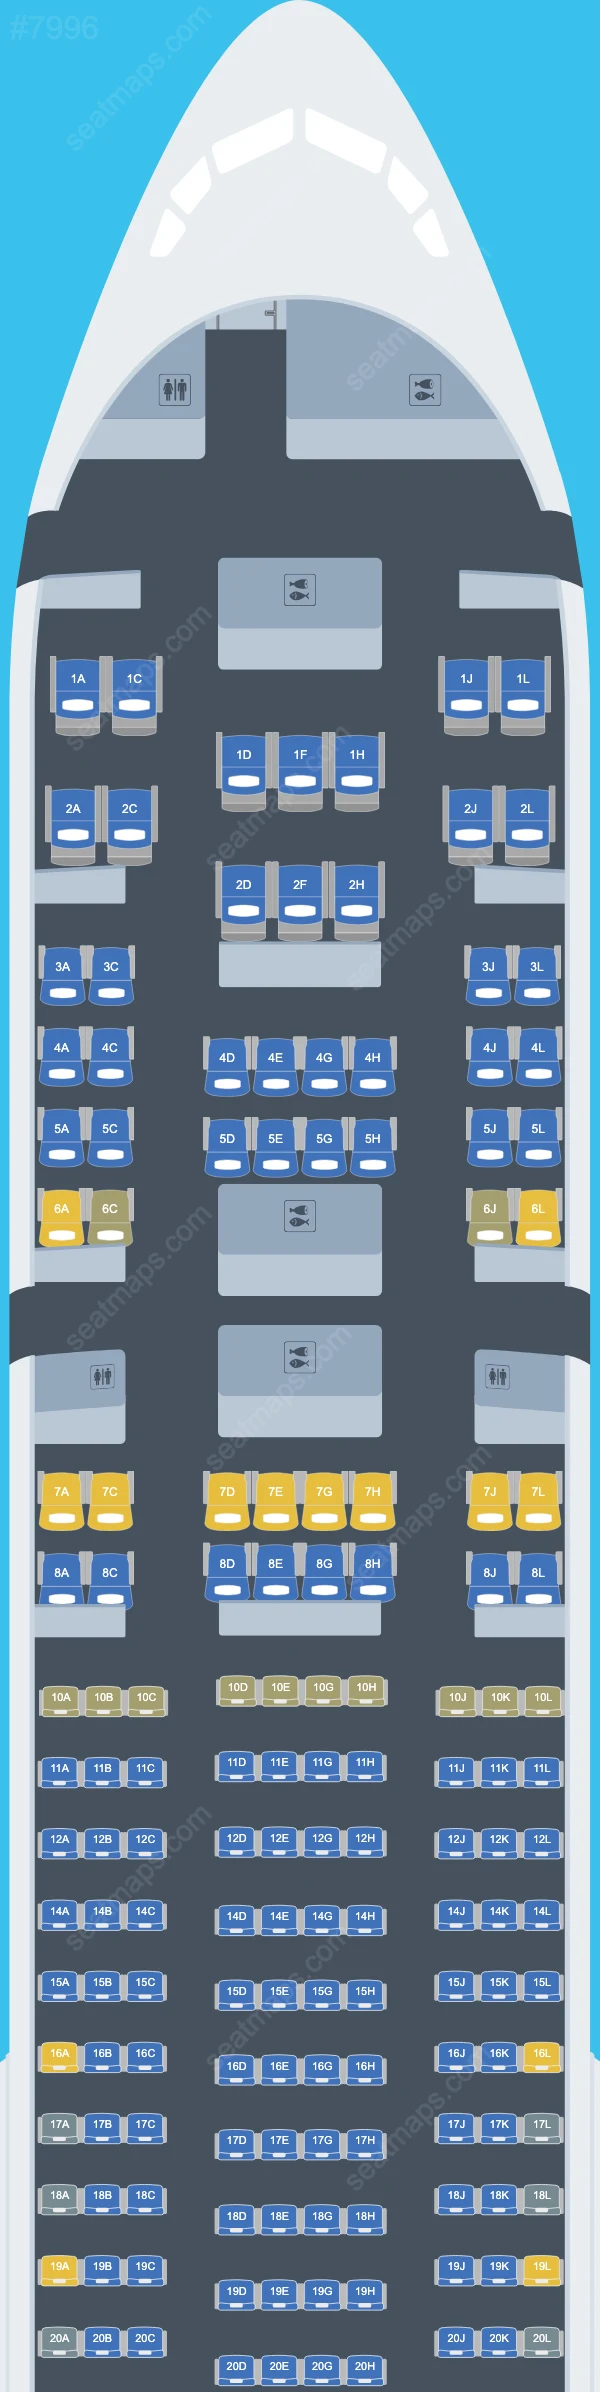 Air Austral Boeing 777 Seat Maps 777-300 ER